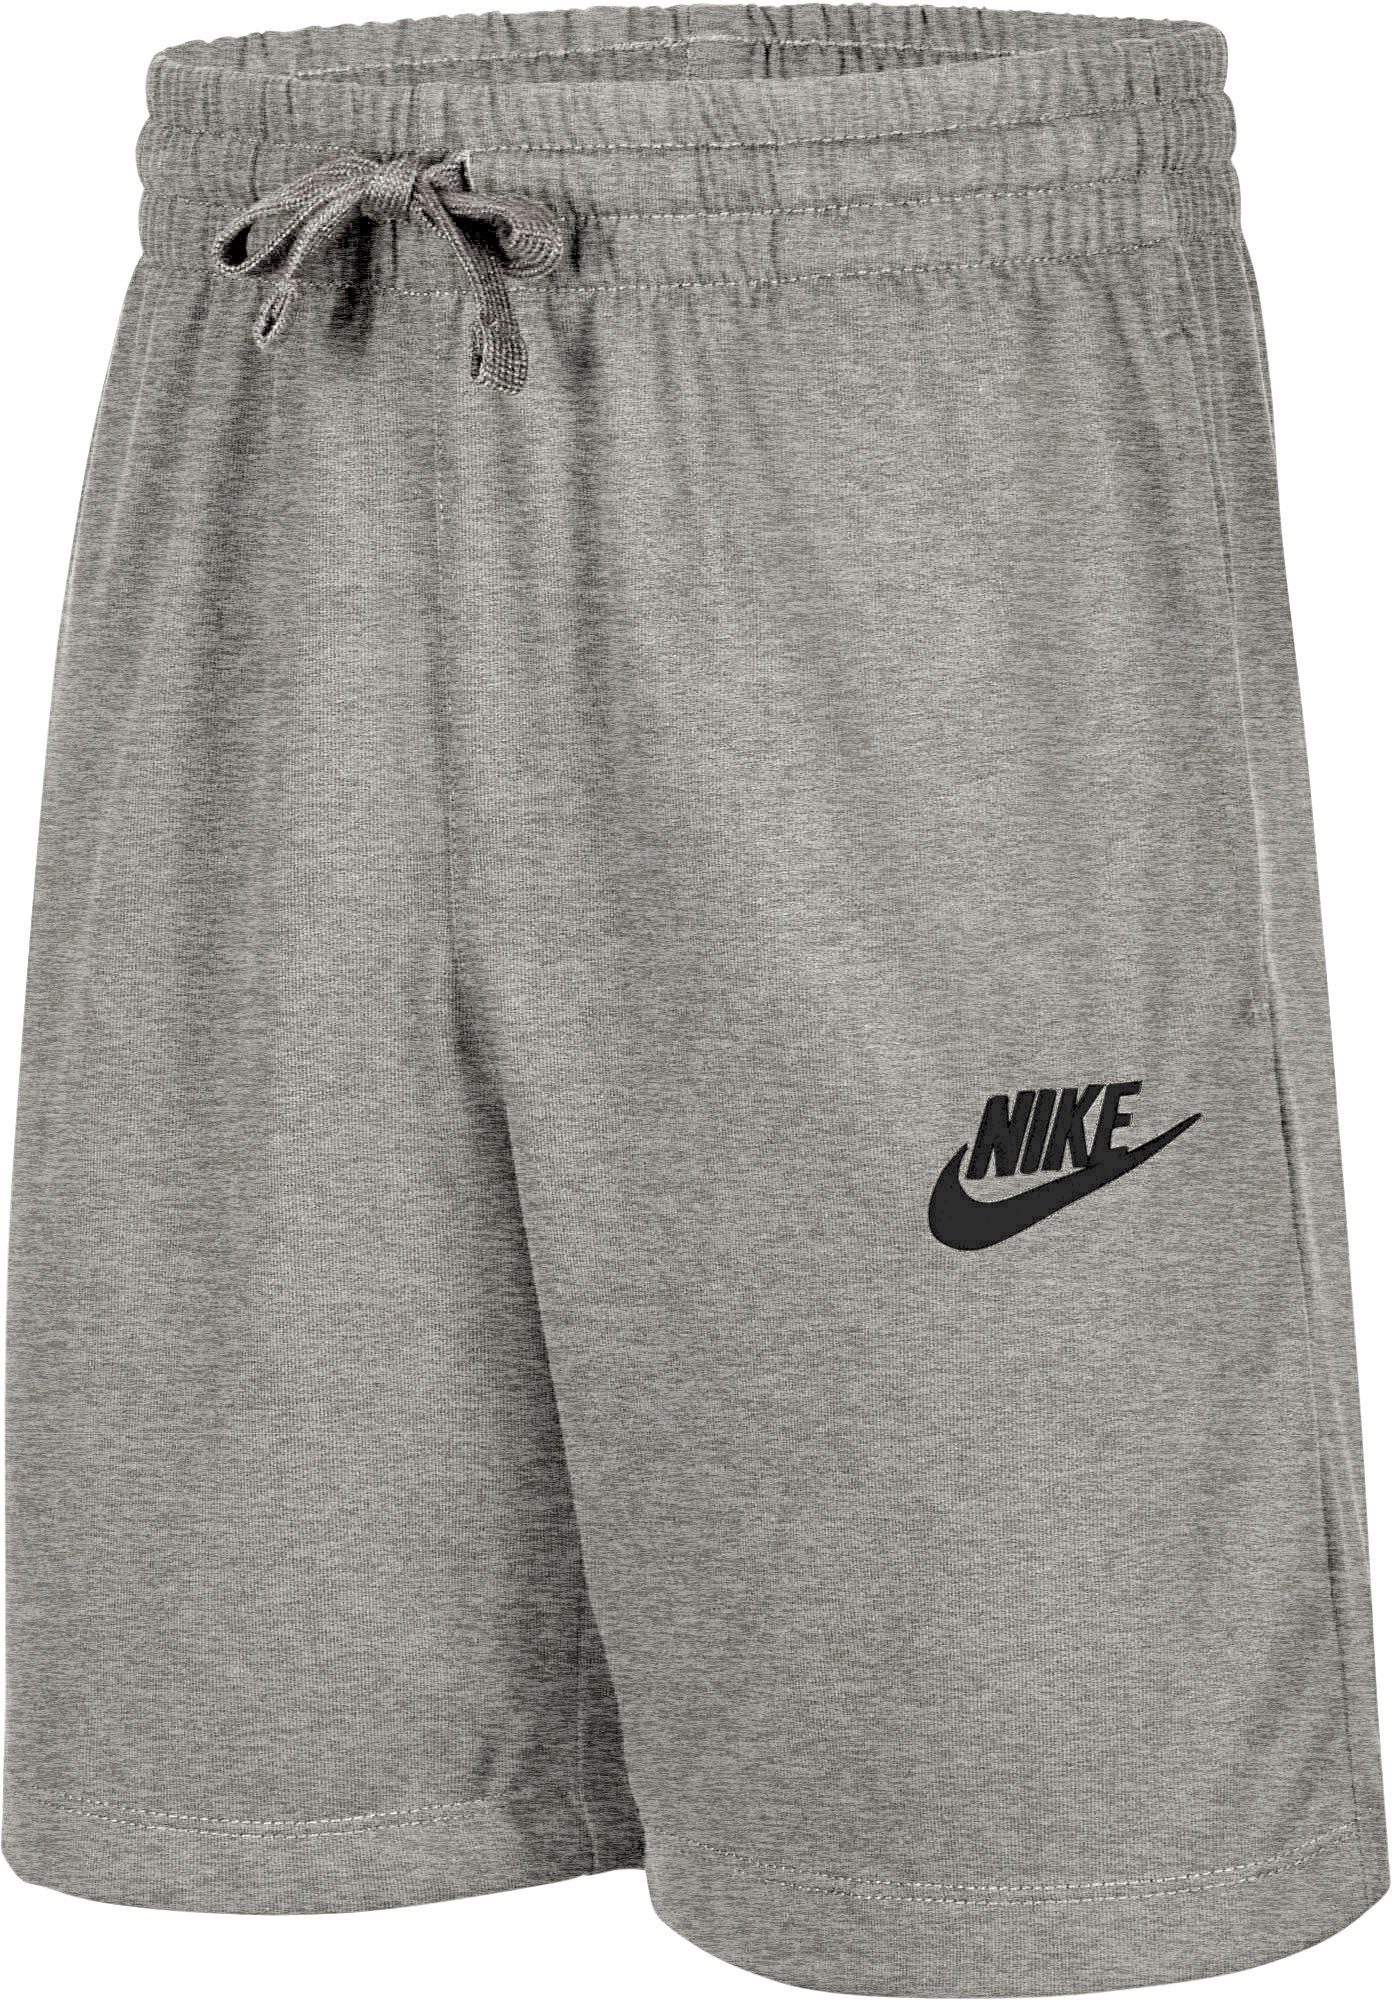 SHORTS KIDS' Nike BIG JERSEY (BOYS) Shorts grau Sportswear